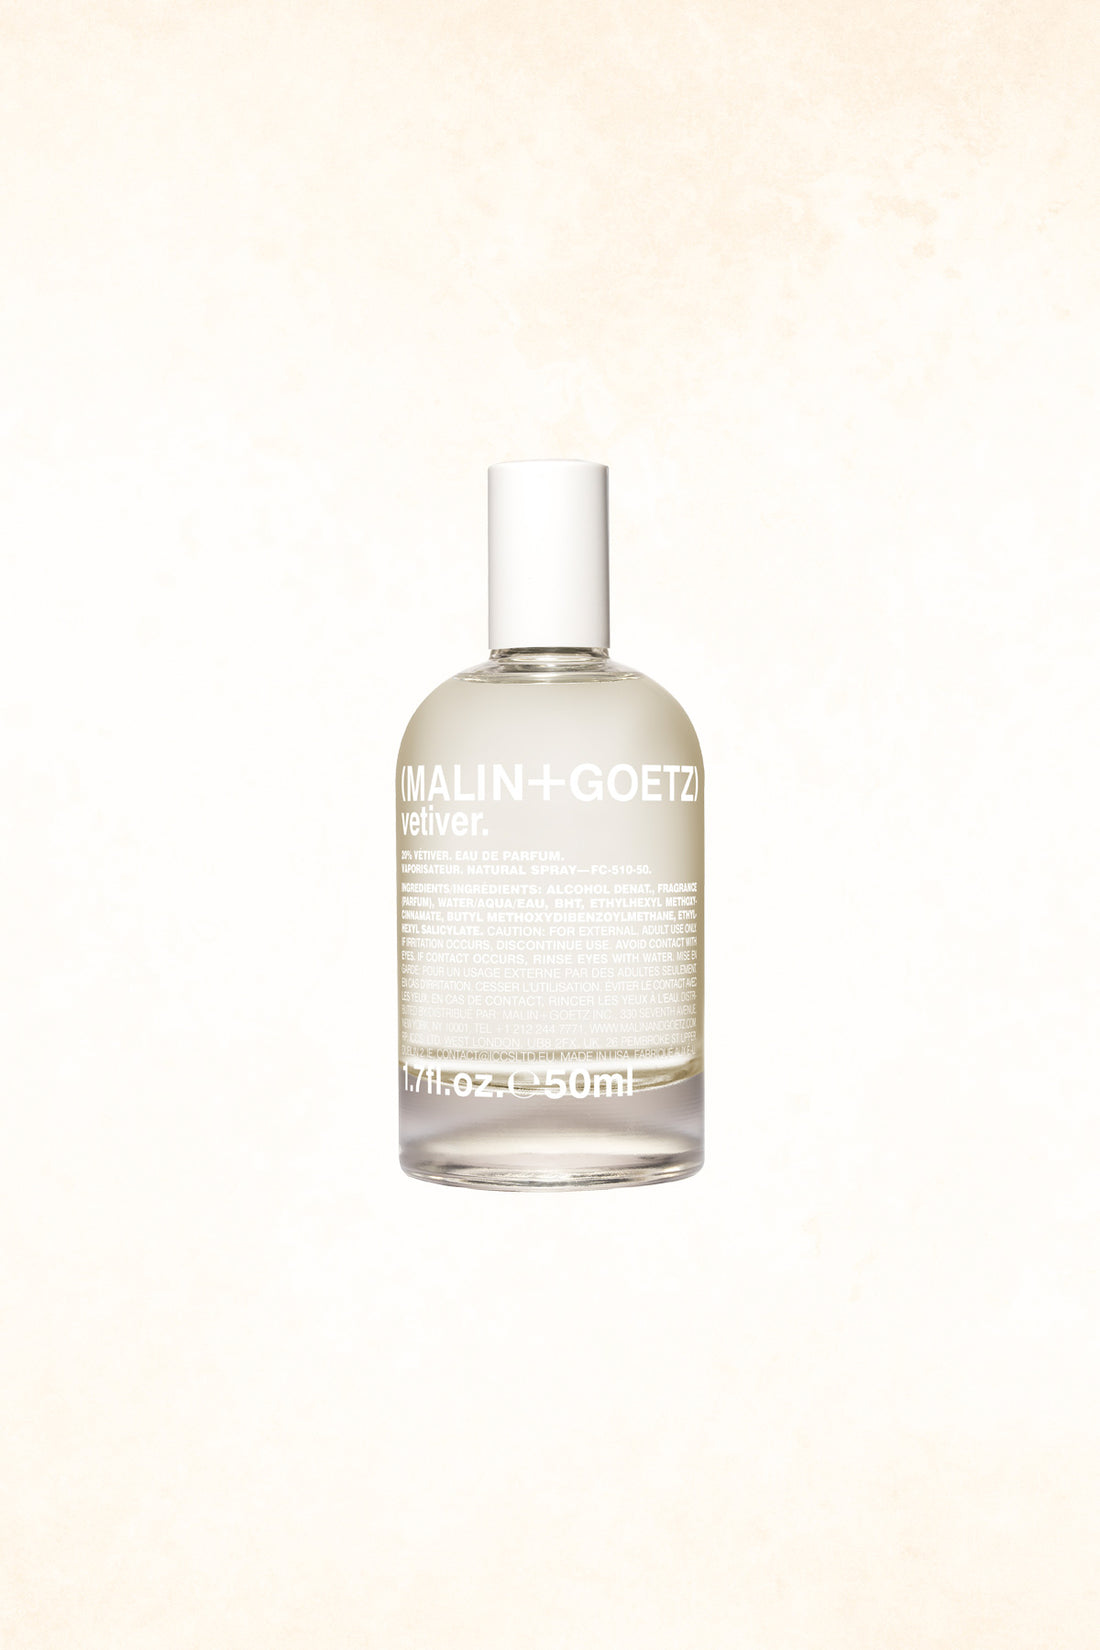 Malin+Goetz – Vetiver Eau De Parfum 1.7 oz / 50 ml